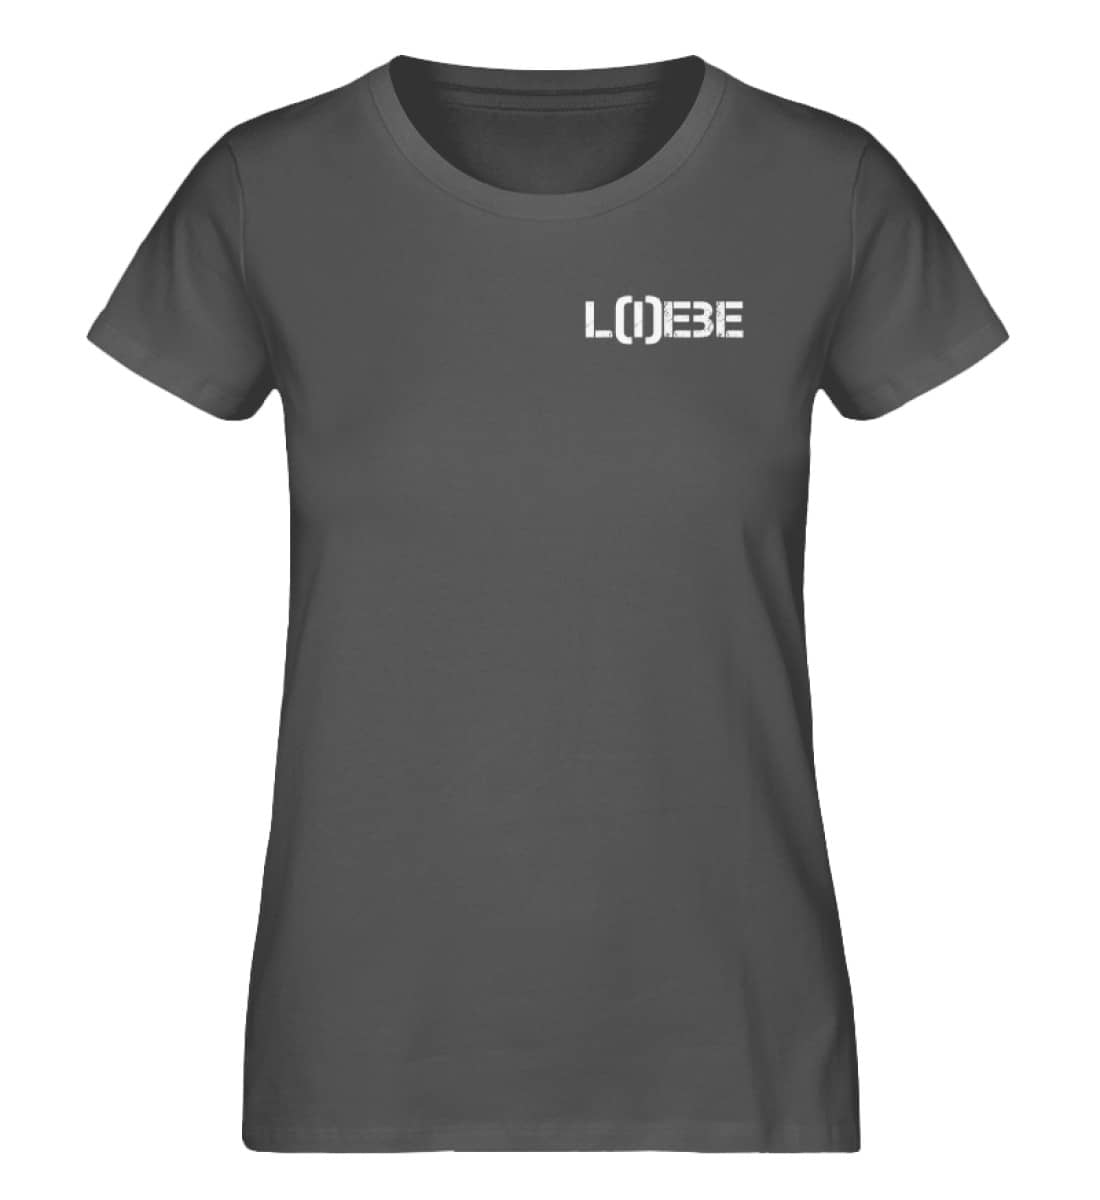 L(i)ebe - Damen Premium Organic Shirt-6896